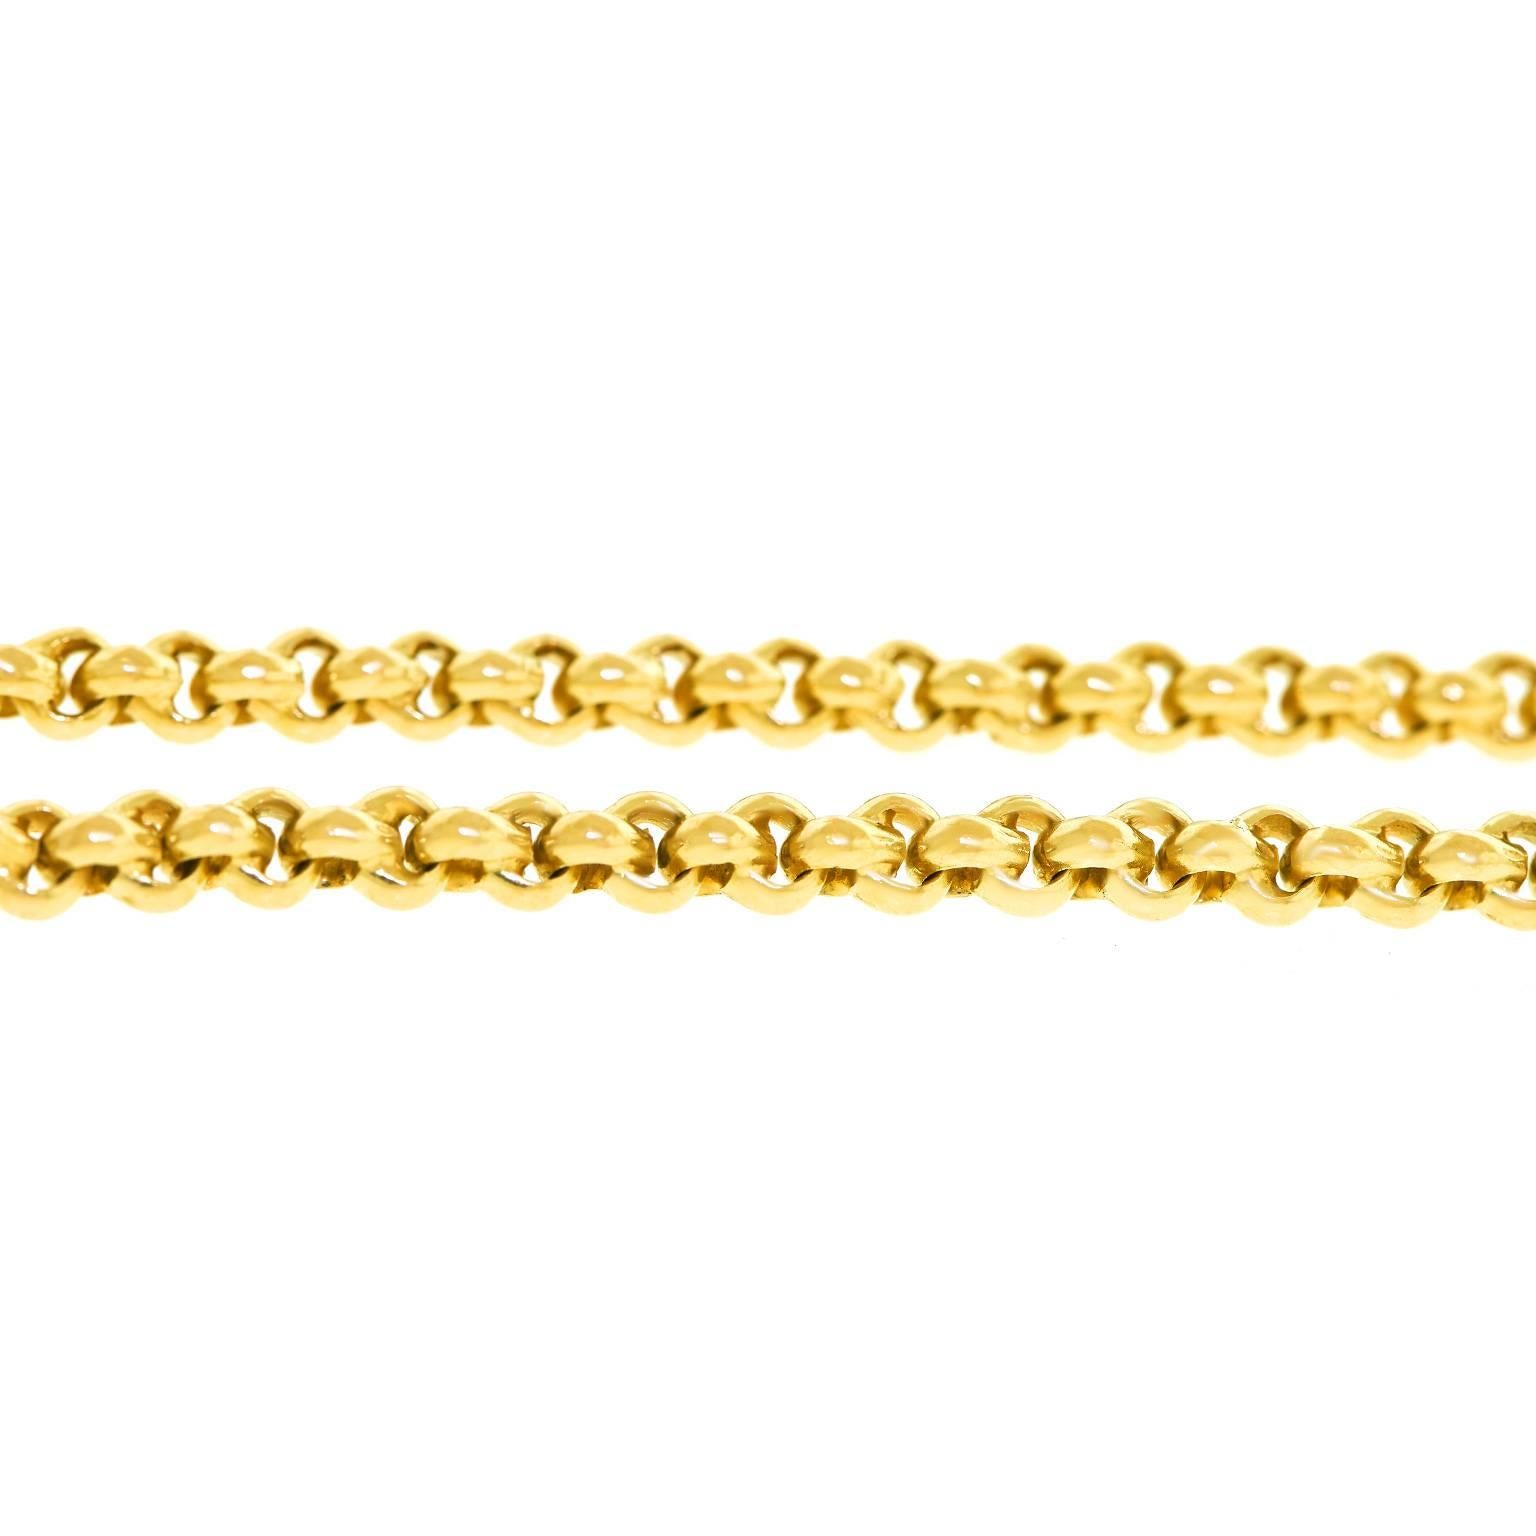 Women's or Men's Heavy Handmade Antique Gold Chain